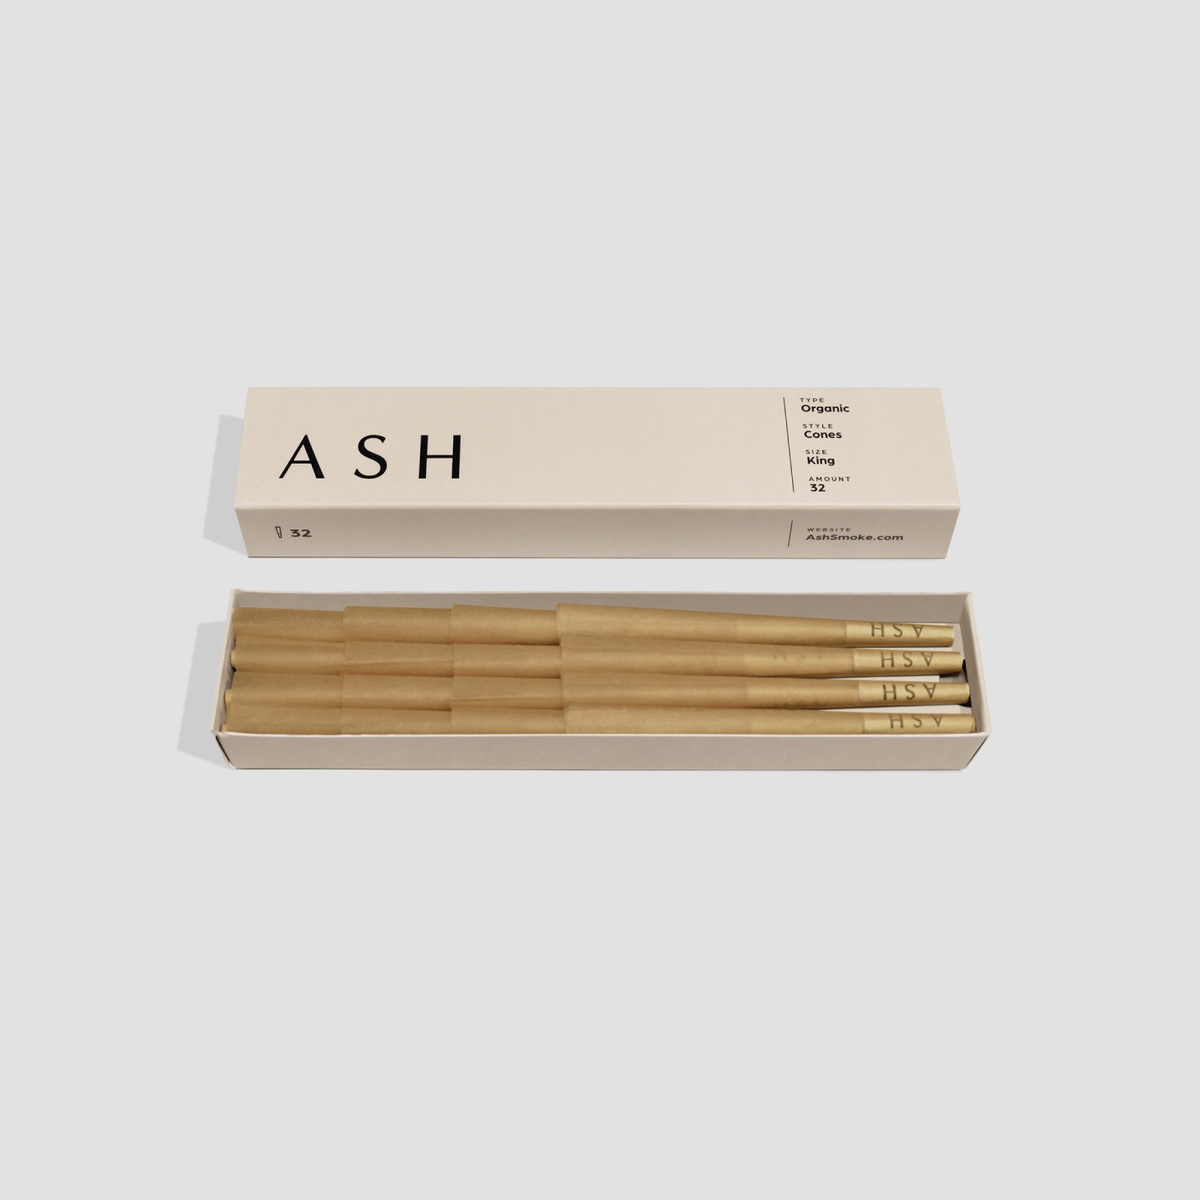 ASH Pre-rolled Cones | Organic | 32 count